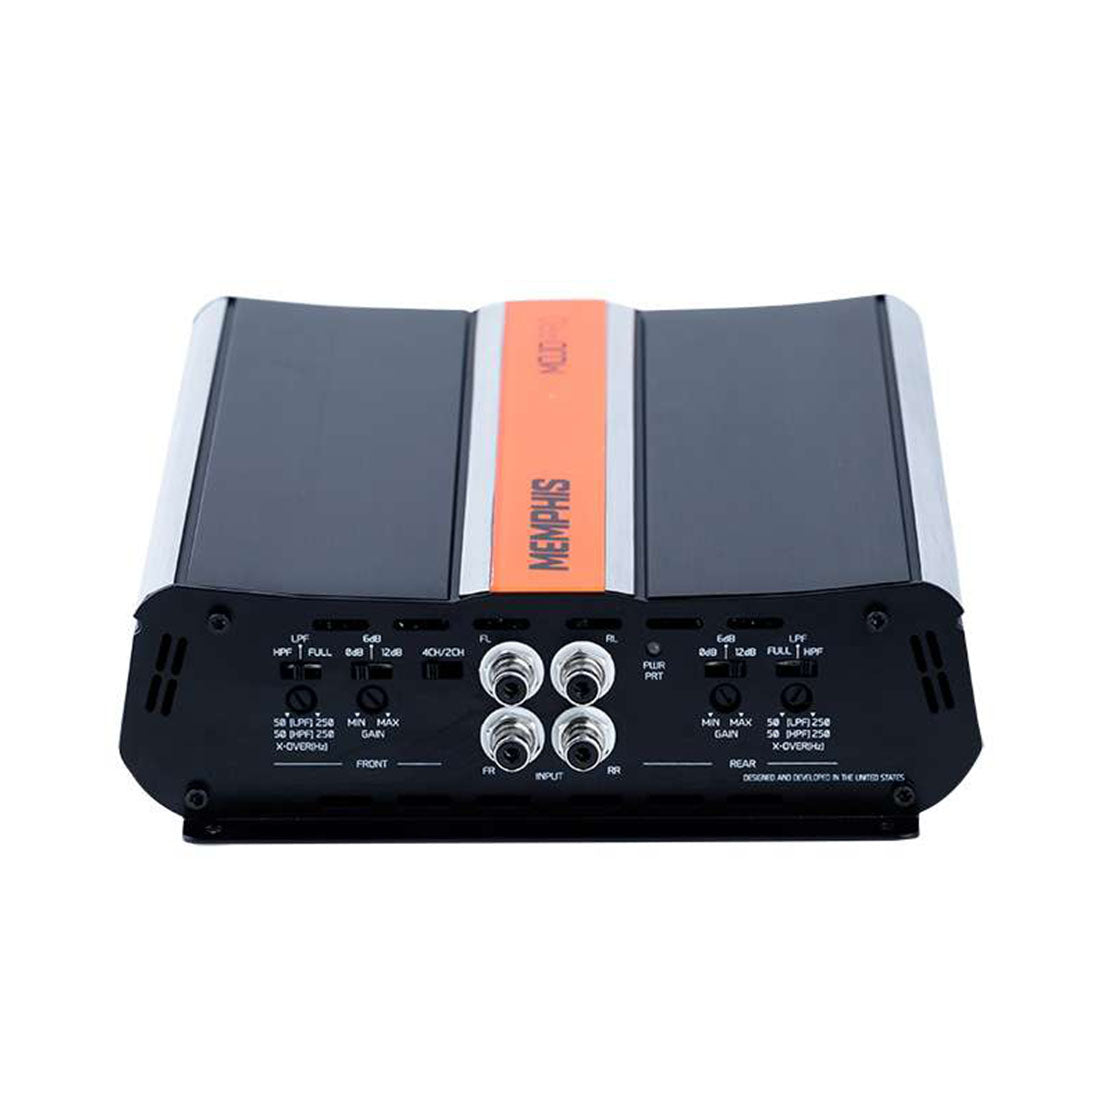 Memphis Audio MJP1000.1 1000W RMS Mojo Pro Series Class-D Mono Car Amplifier